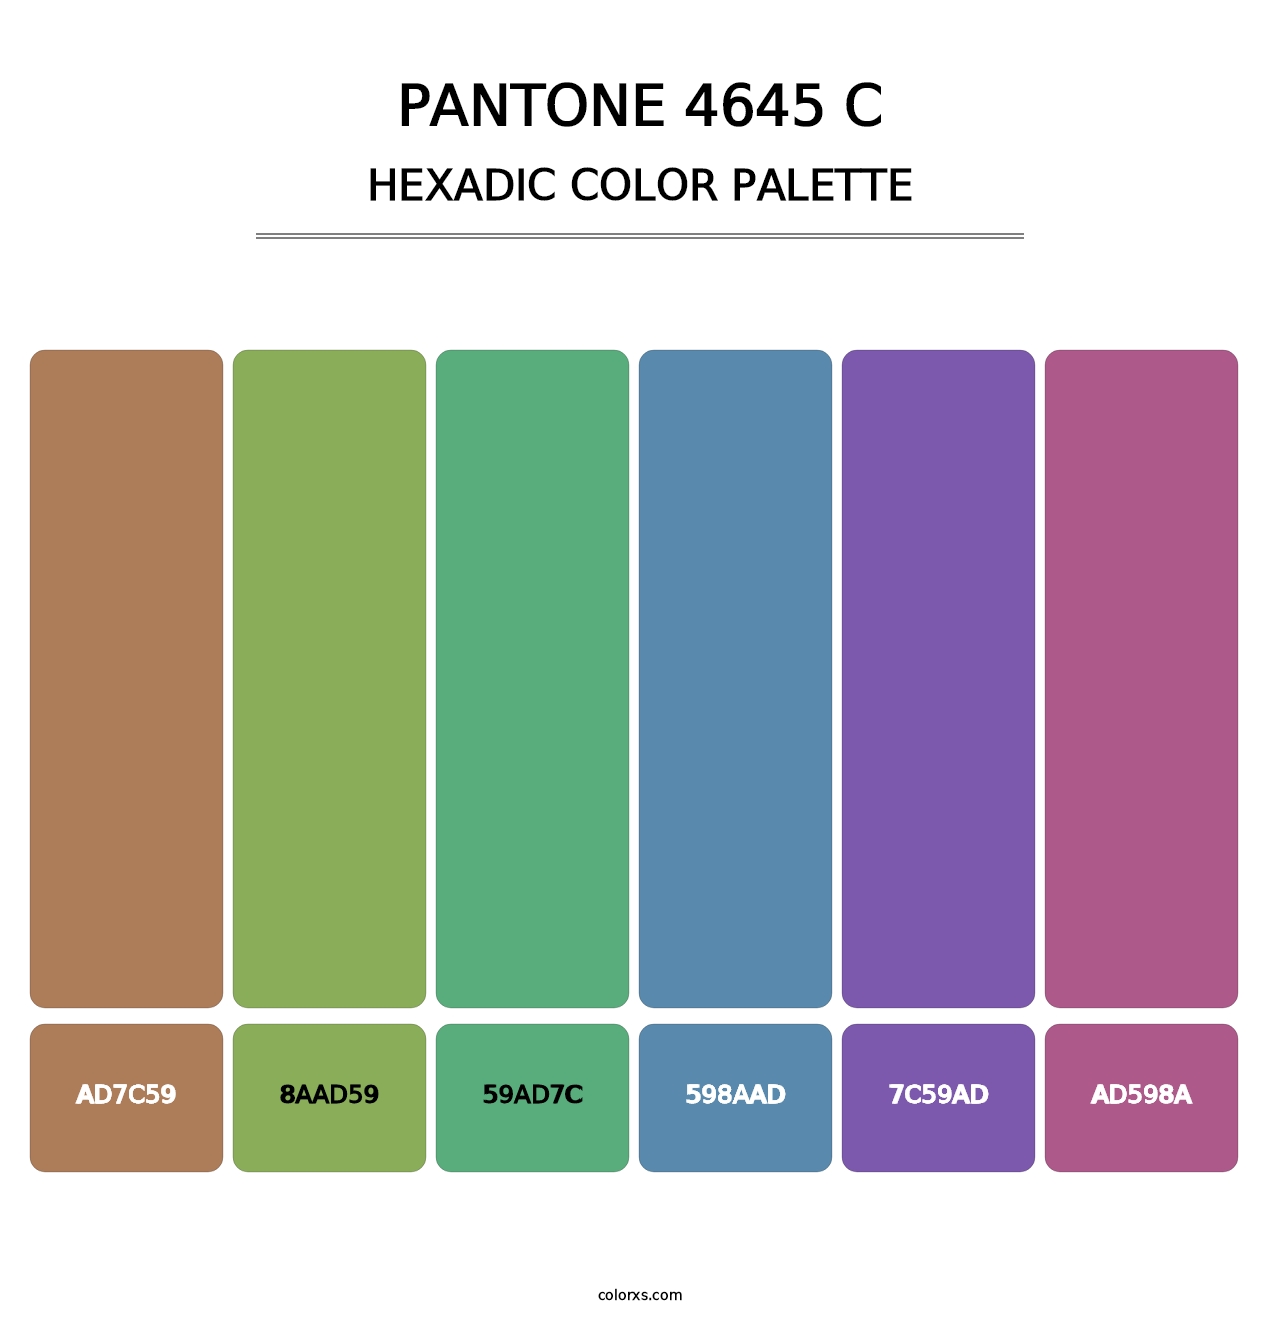 PANTONE 4645 C - Hexadic Color Palette